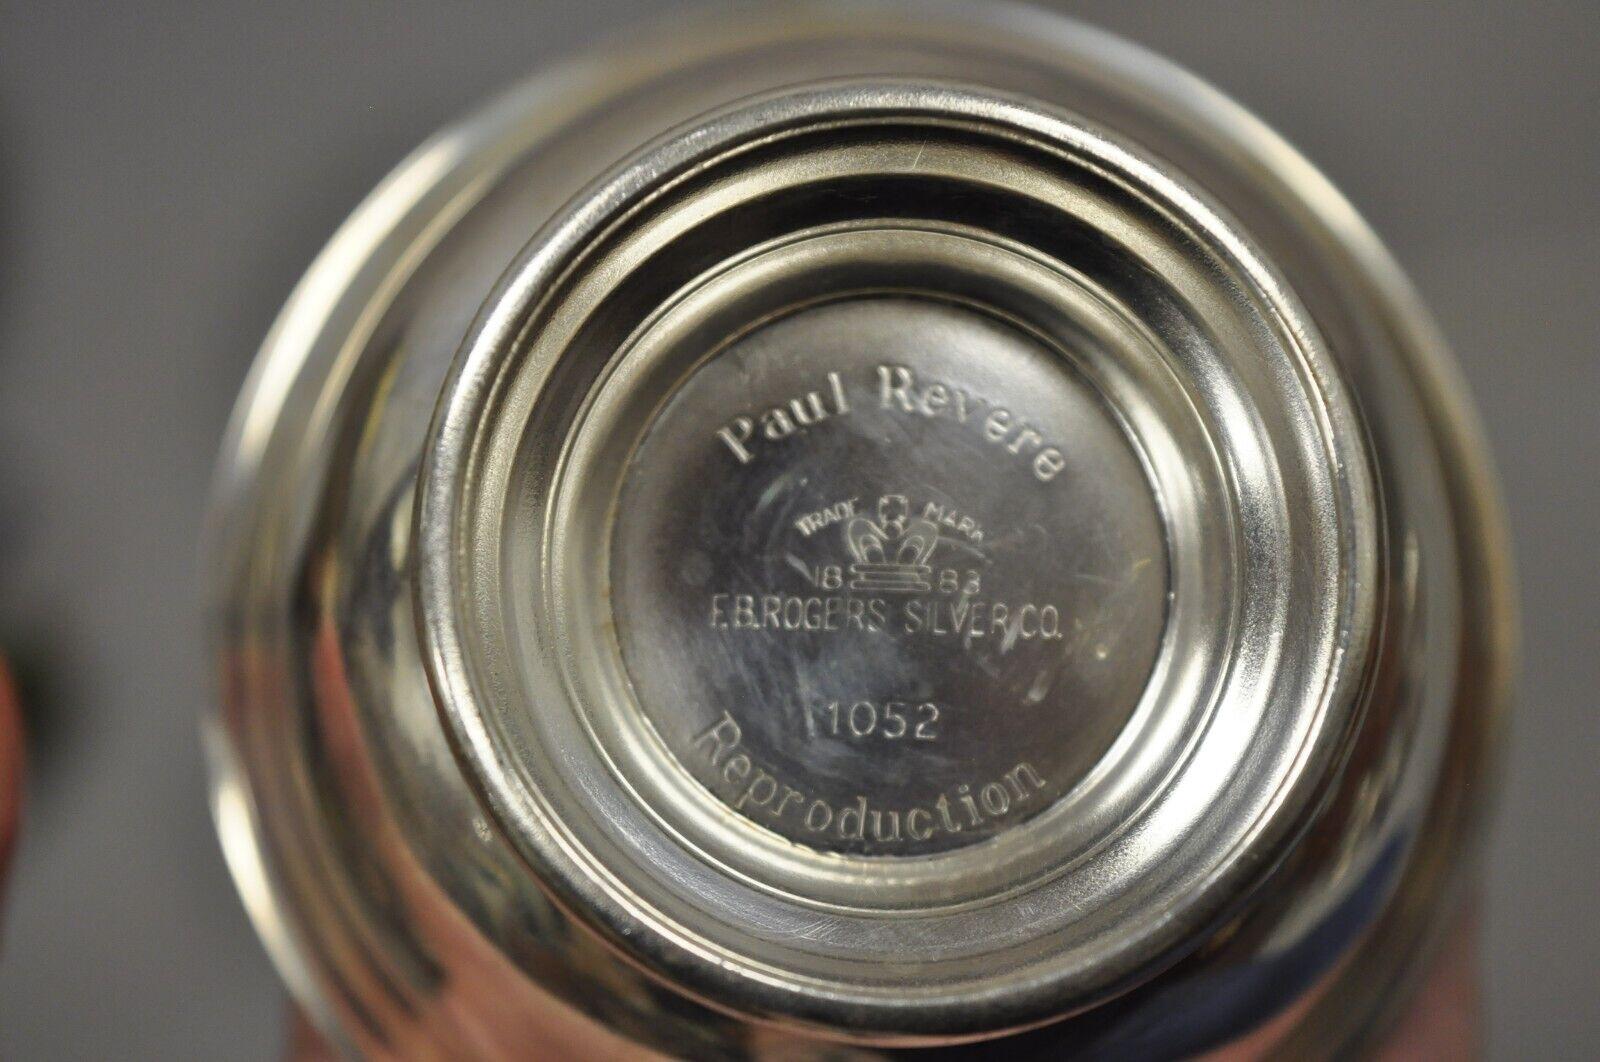 20th Century F.B Rogers Paul Revere Silver Serving Set, Sugar Bowl Creamer Tray, 3 Piece Set